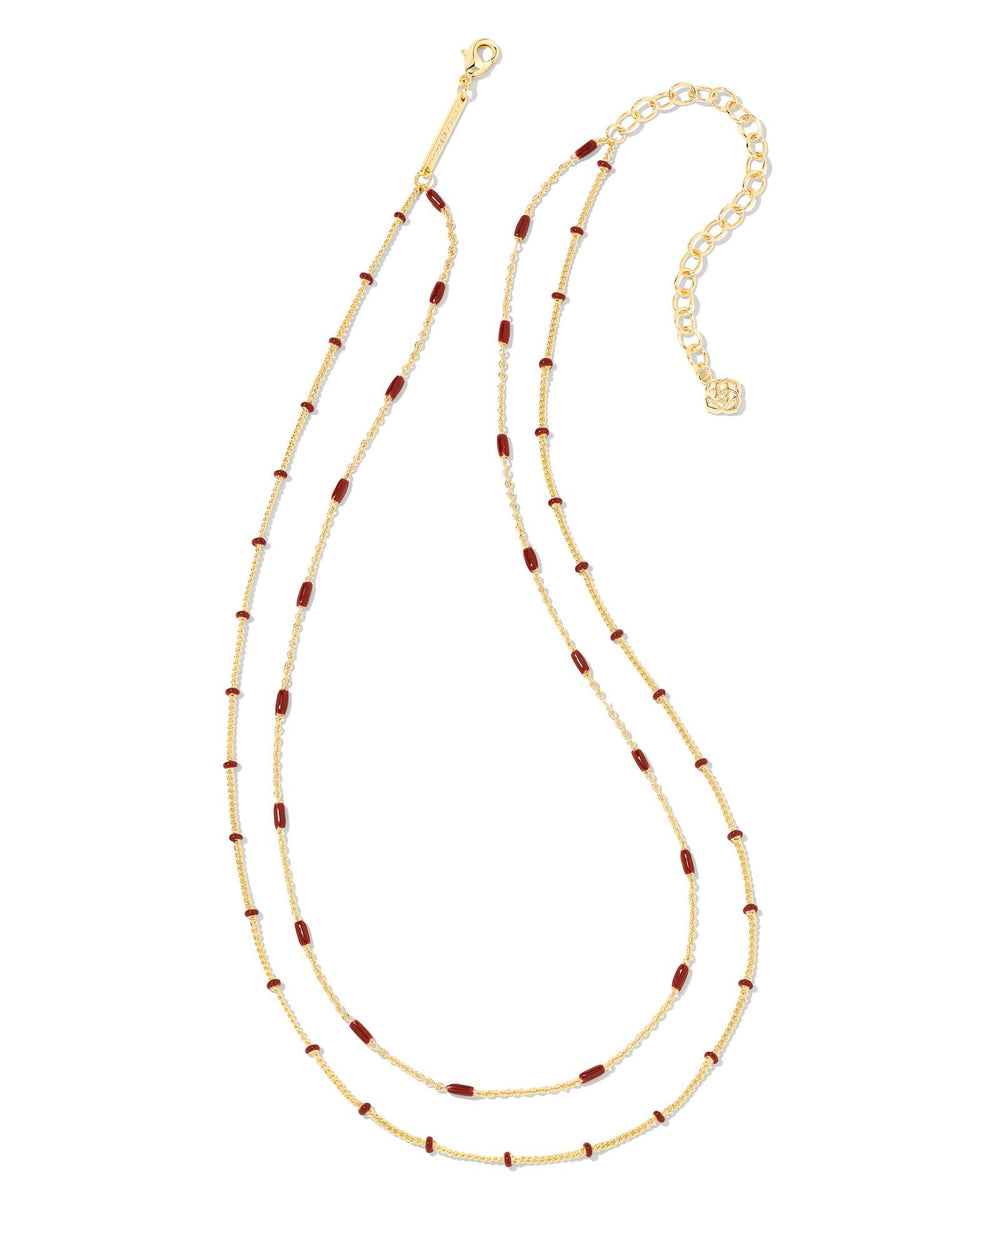 Dottie Gold Multi Strand Necklace in Burgundy